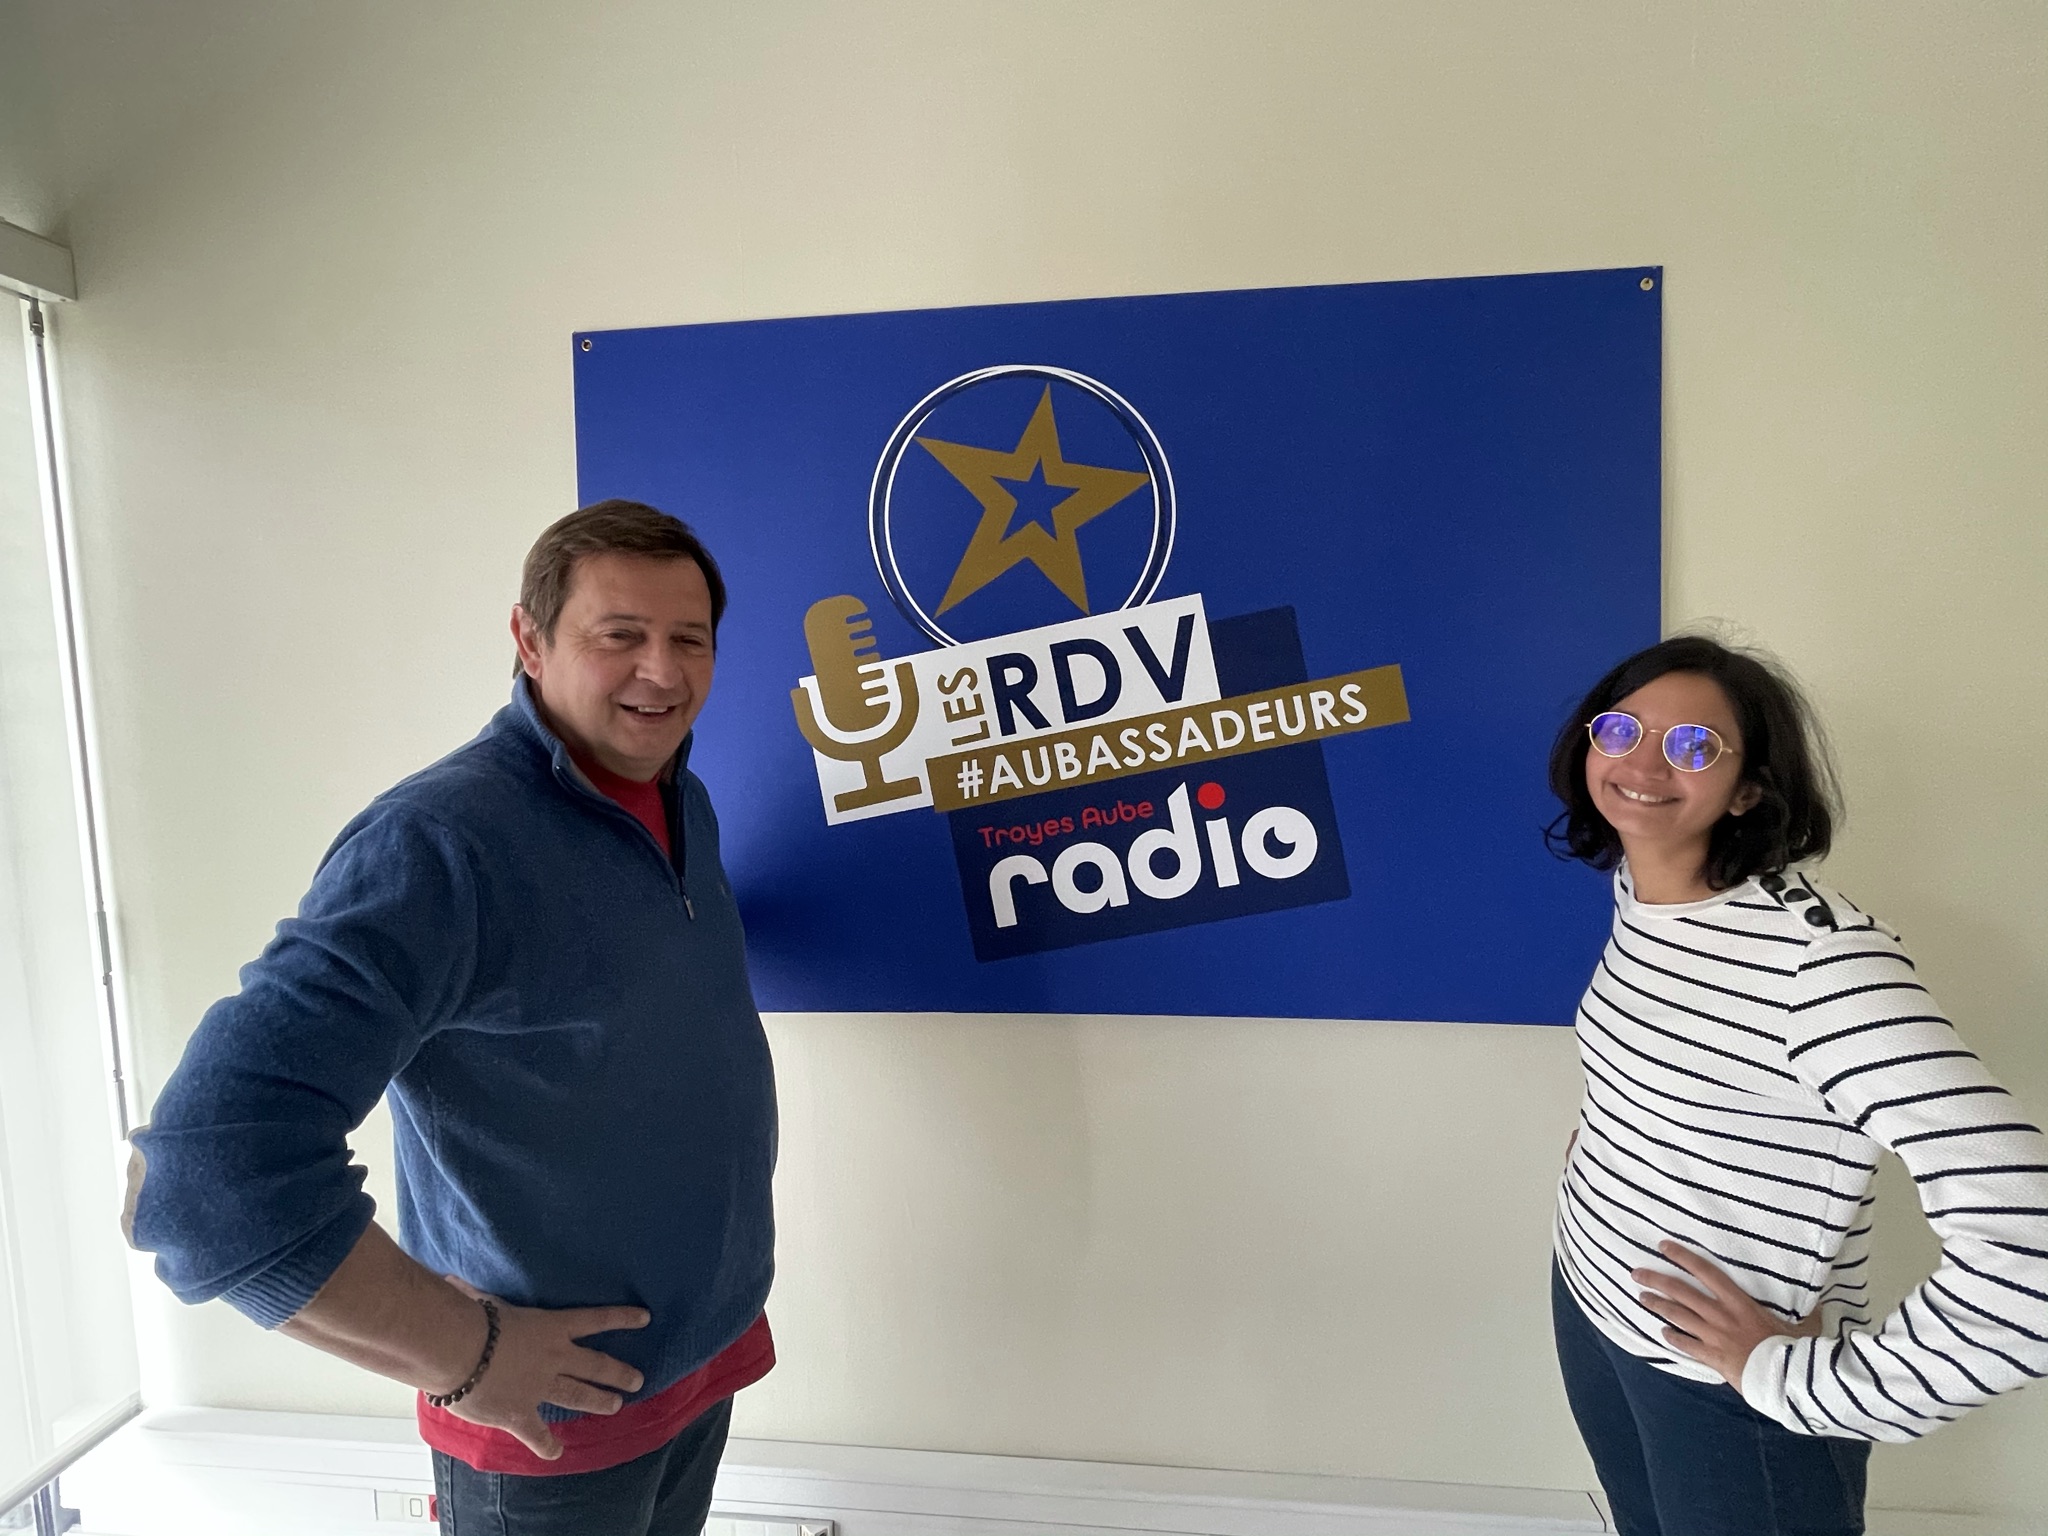 Les RDV des AUBASSADEURS avec Troyes Aube Radio